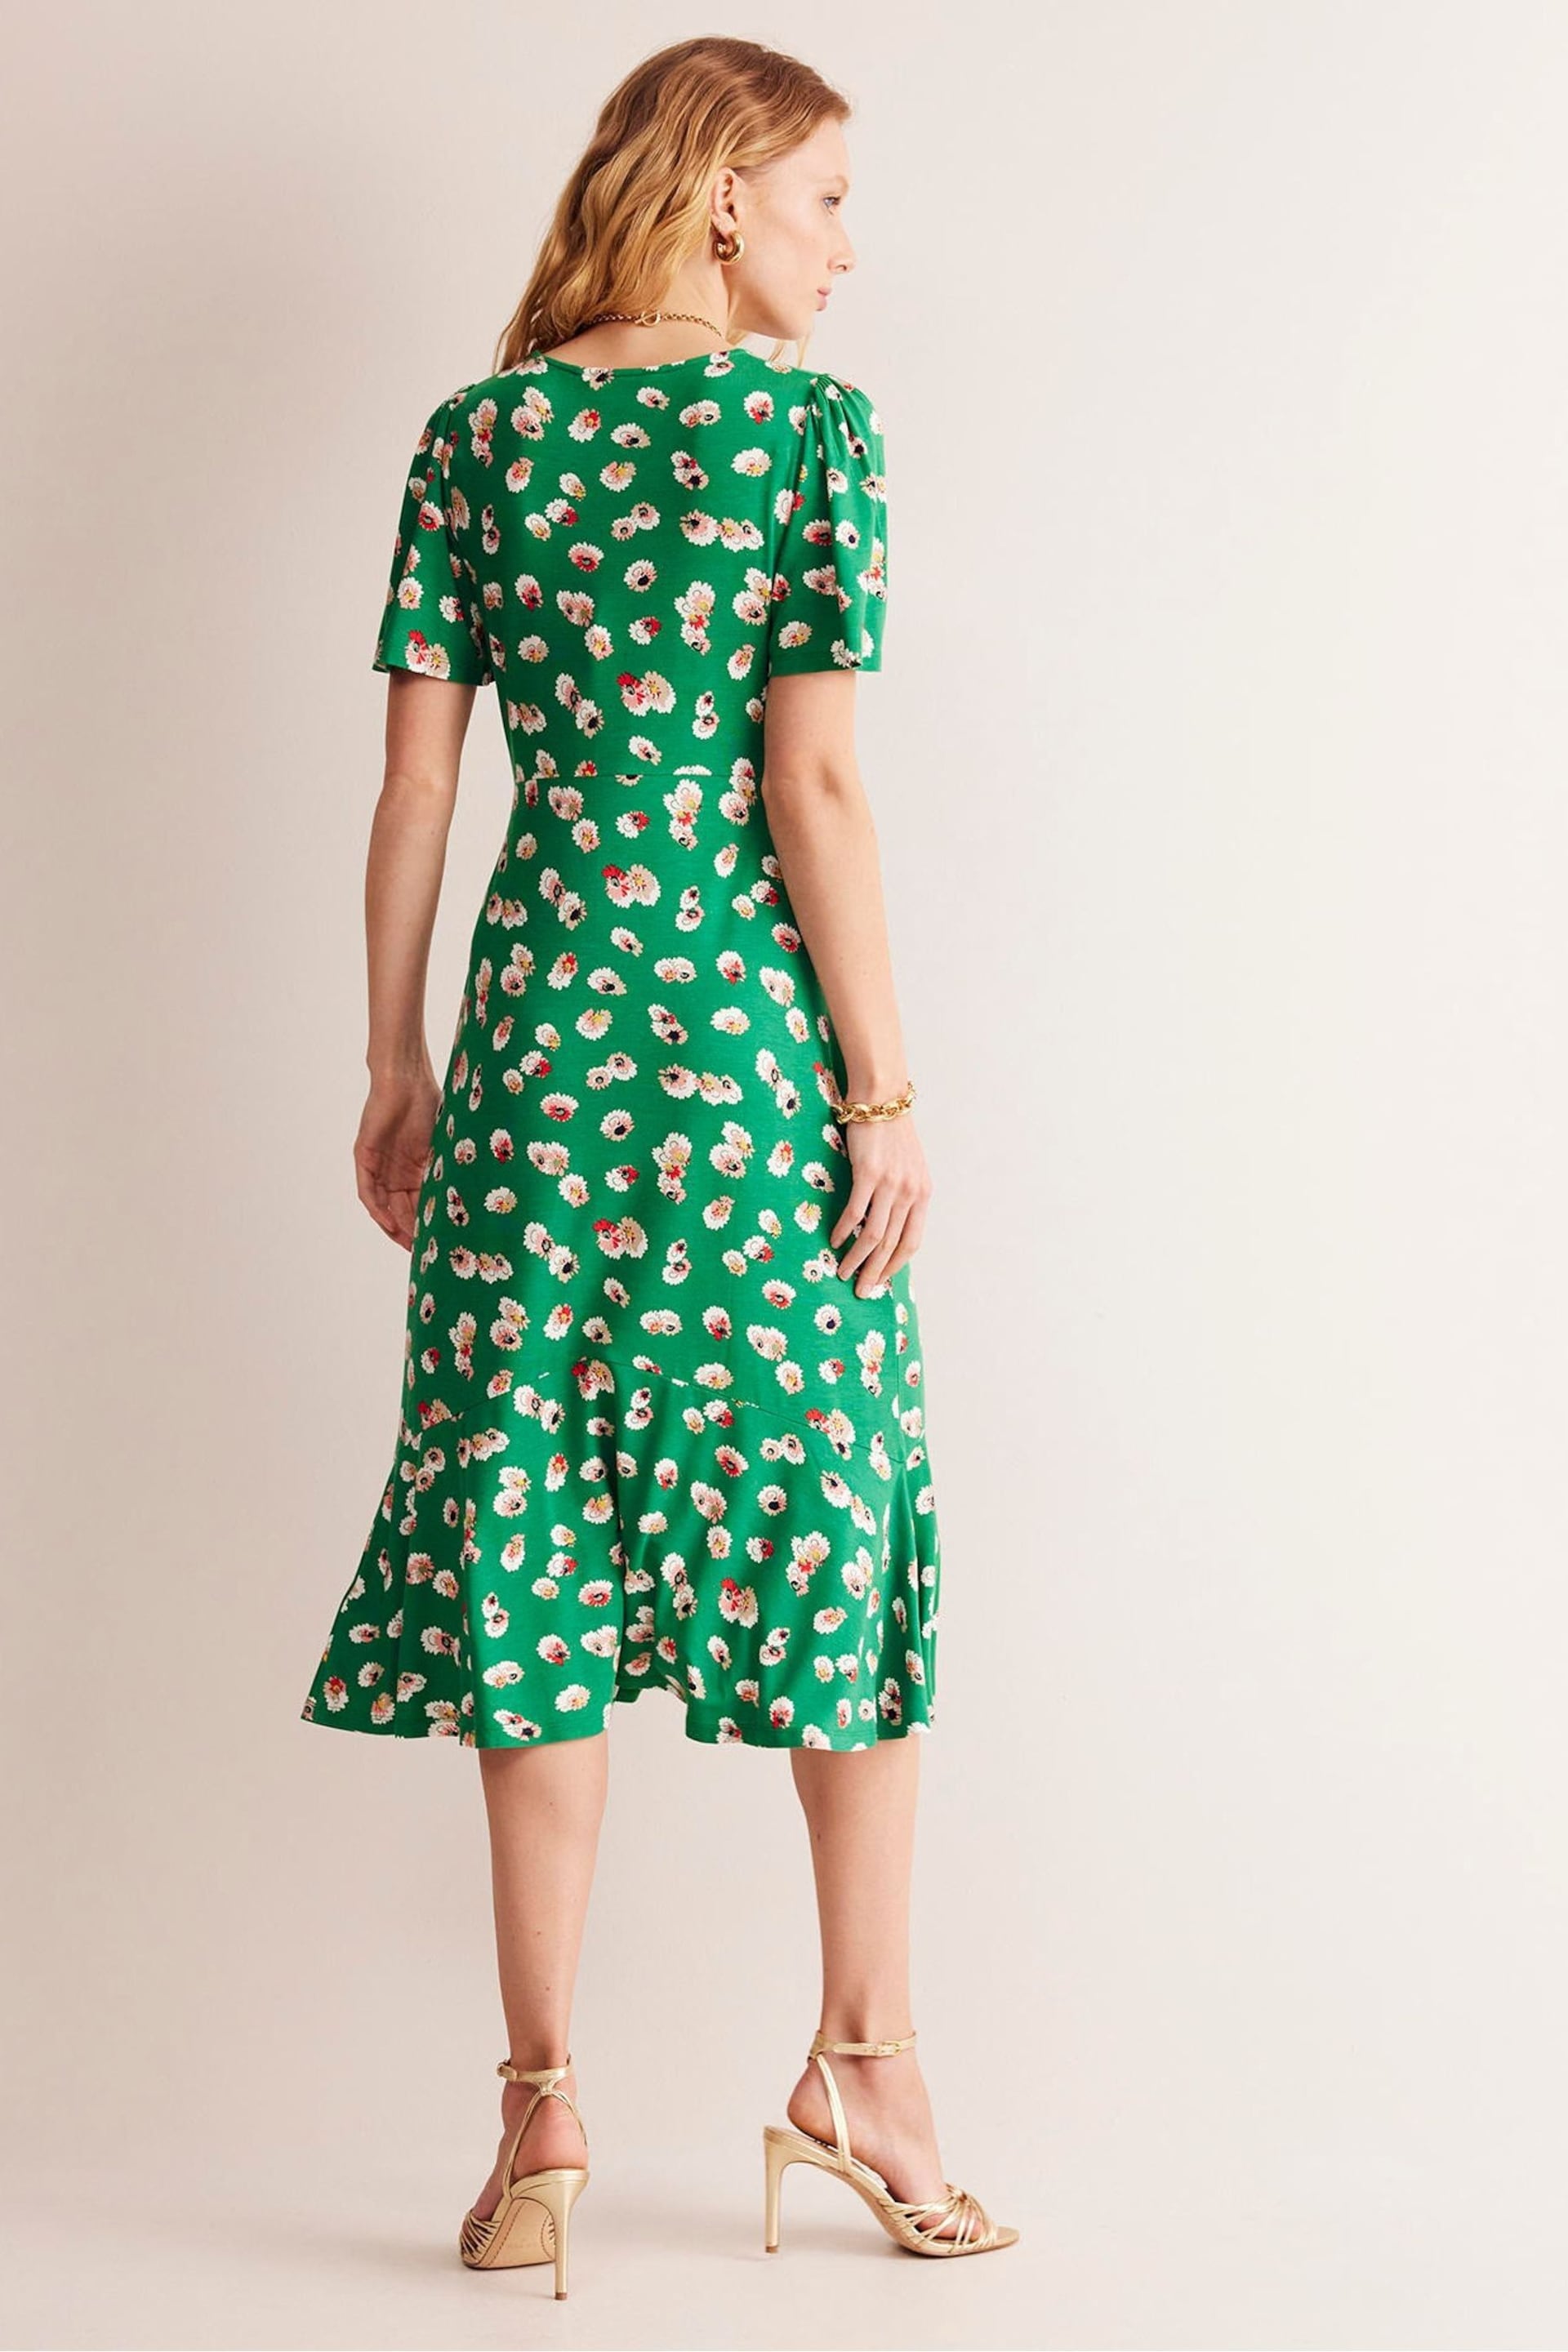 Boden Green Felicity Jersey Midi Tea Dress - Image 3 of 5